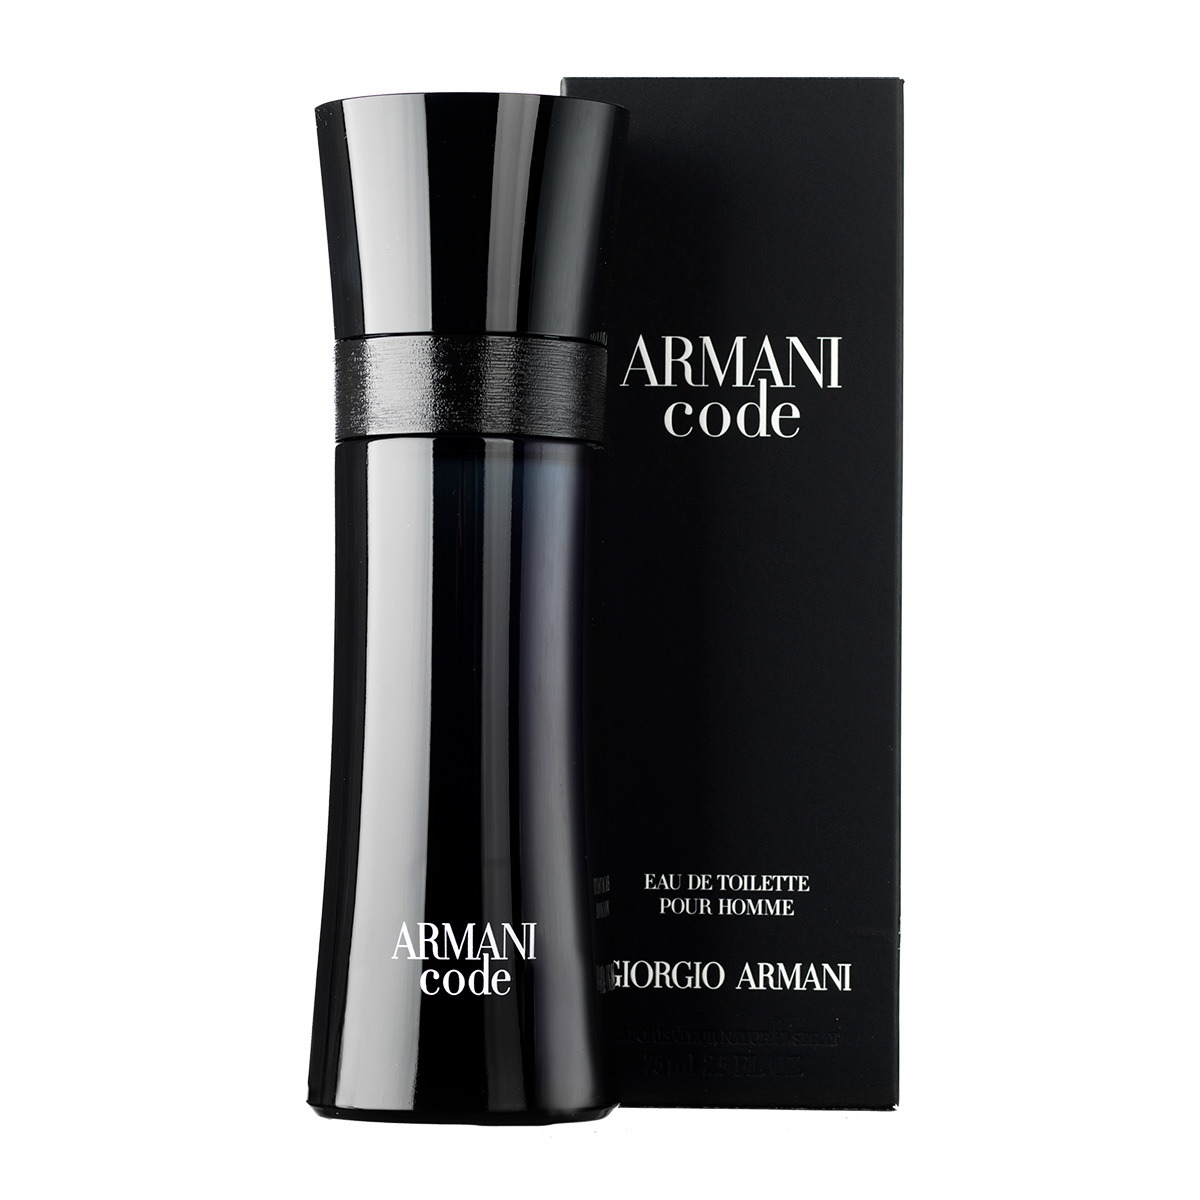 ARMANI CODE EDT 75 ML FOR MEN Perfume Bangladesh